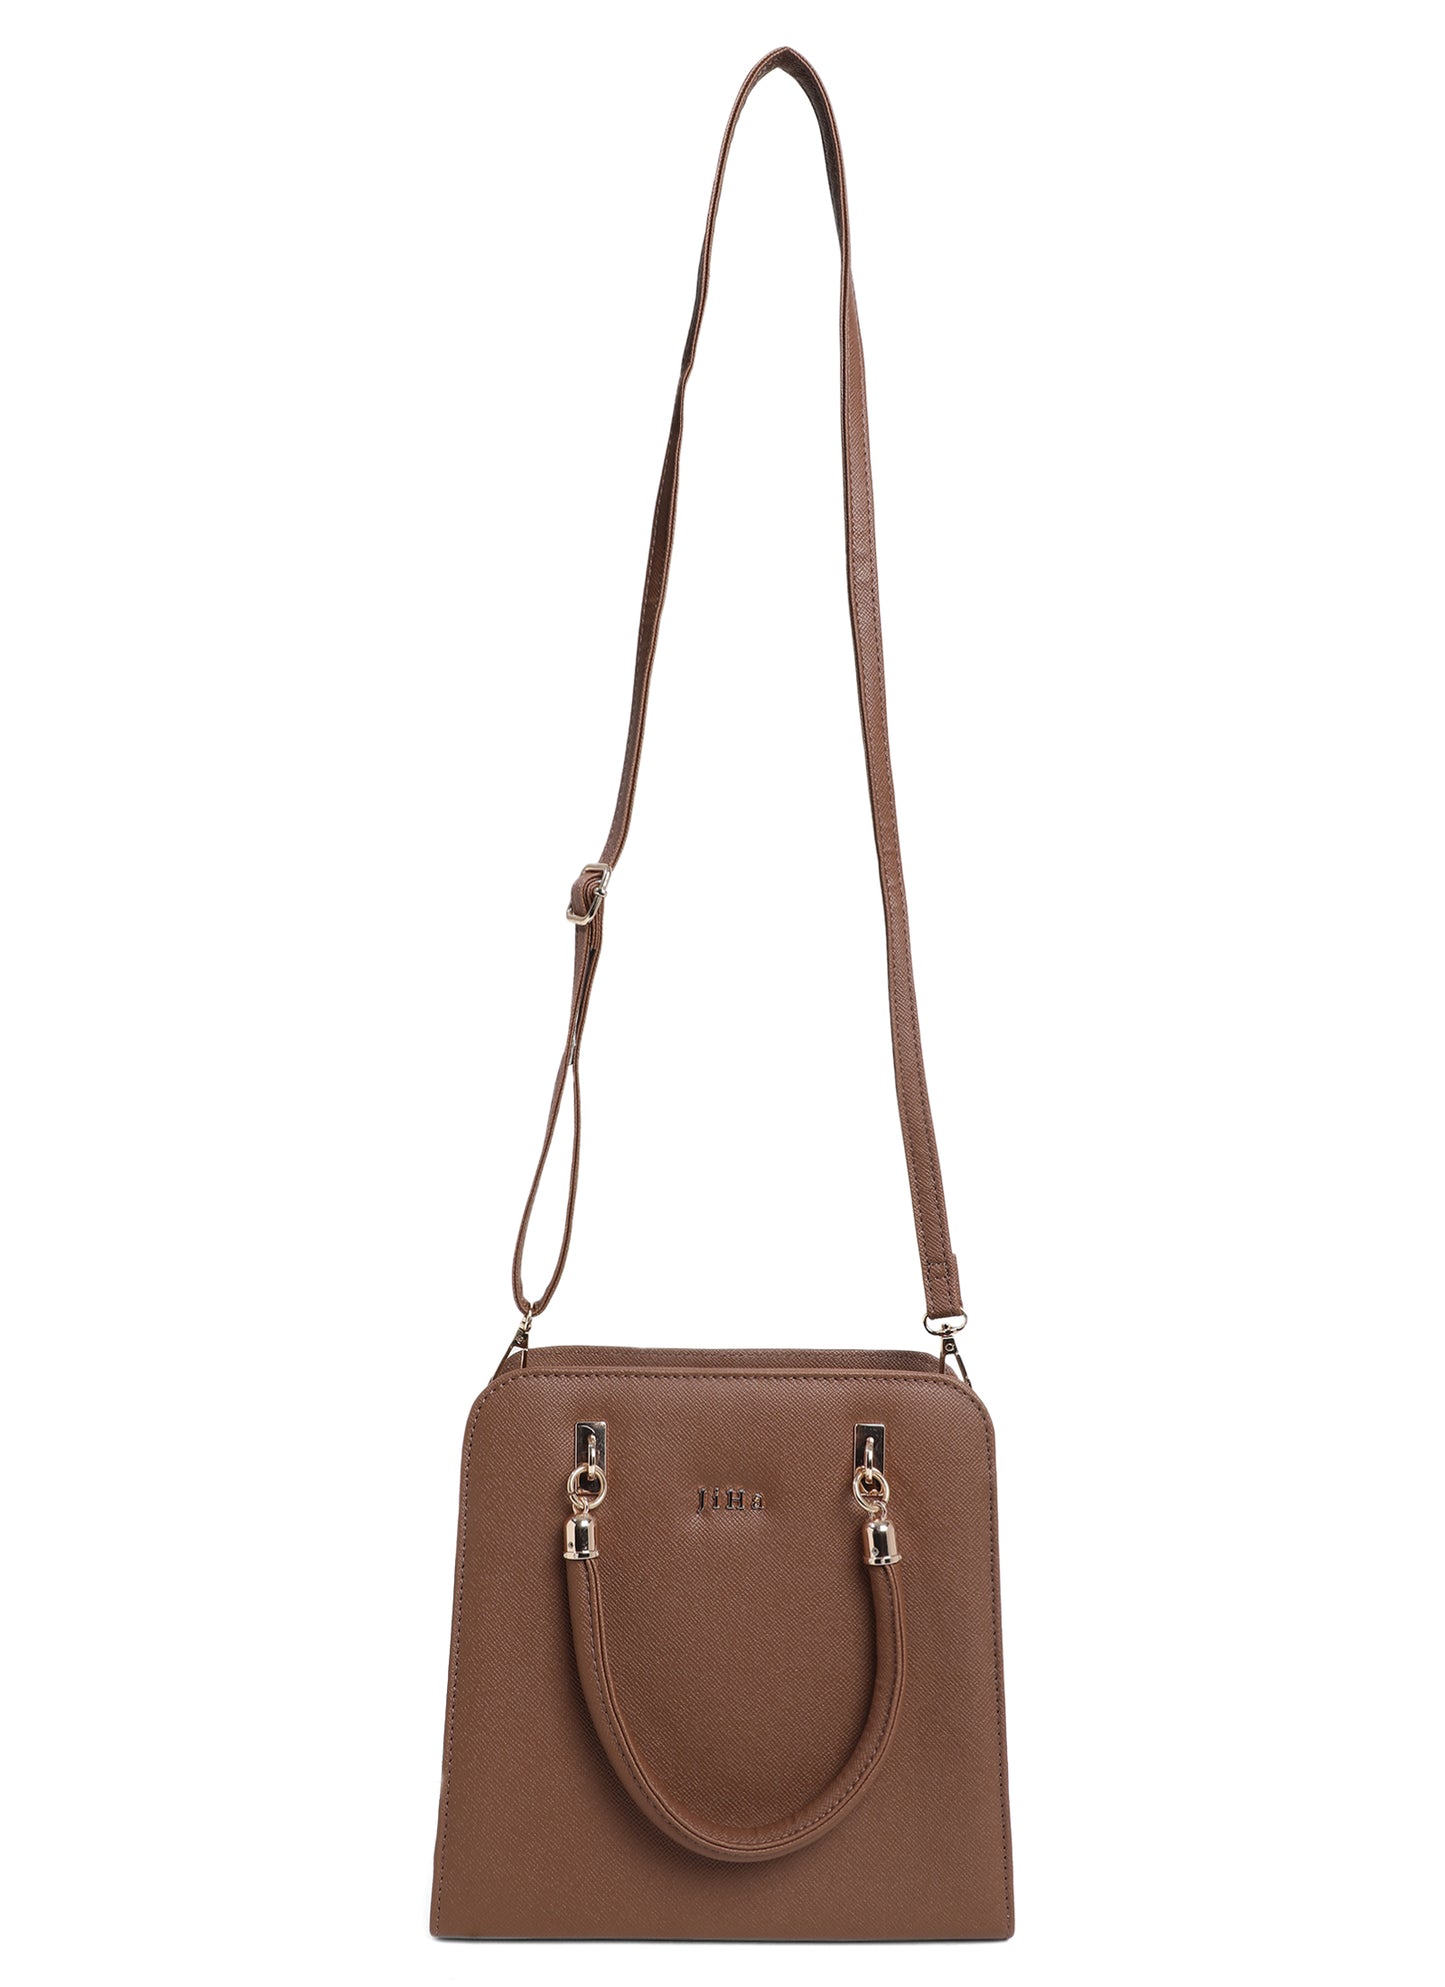 Jiha Faux Leather Brown Box Satchel Hand Bag / Sling Bag